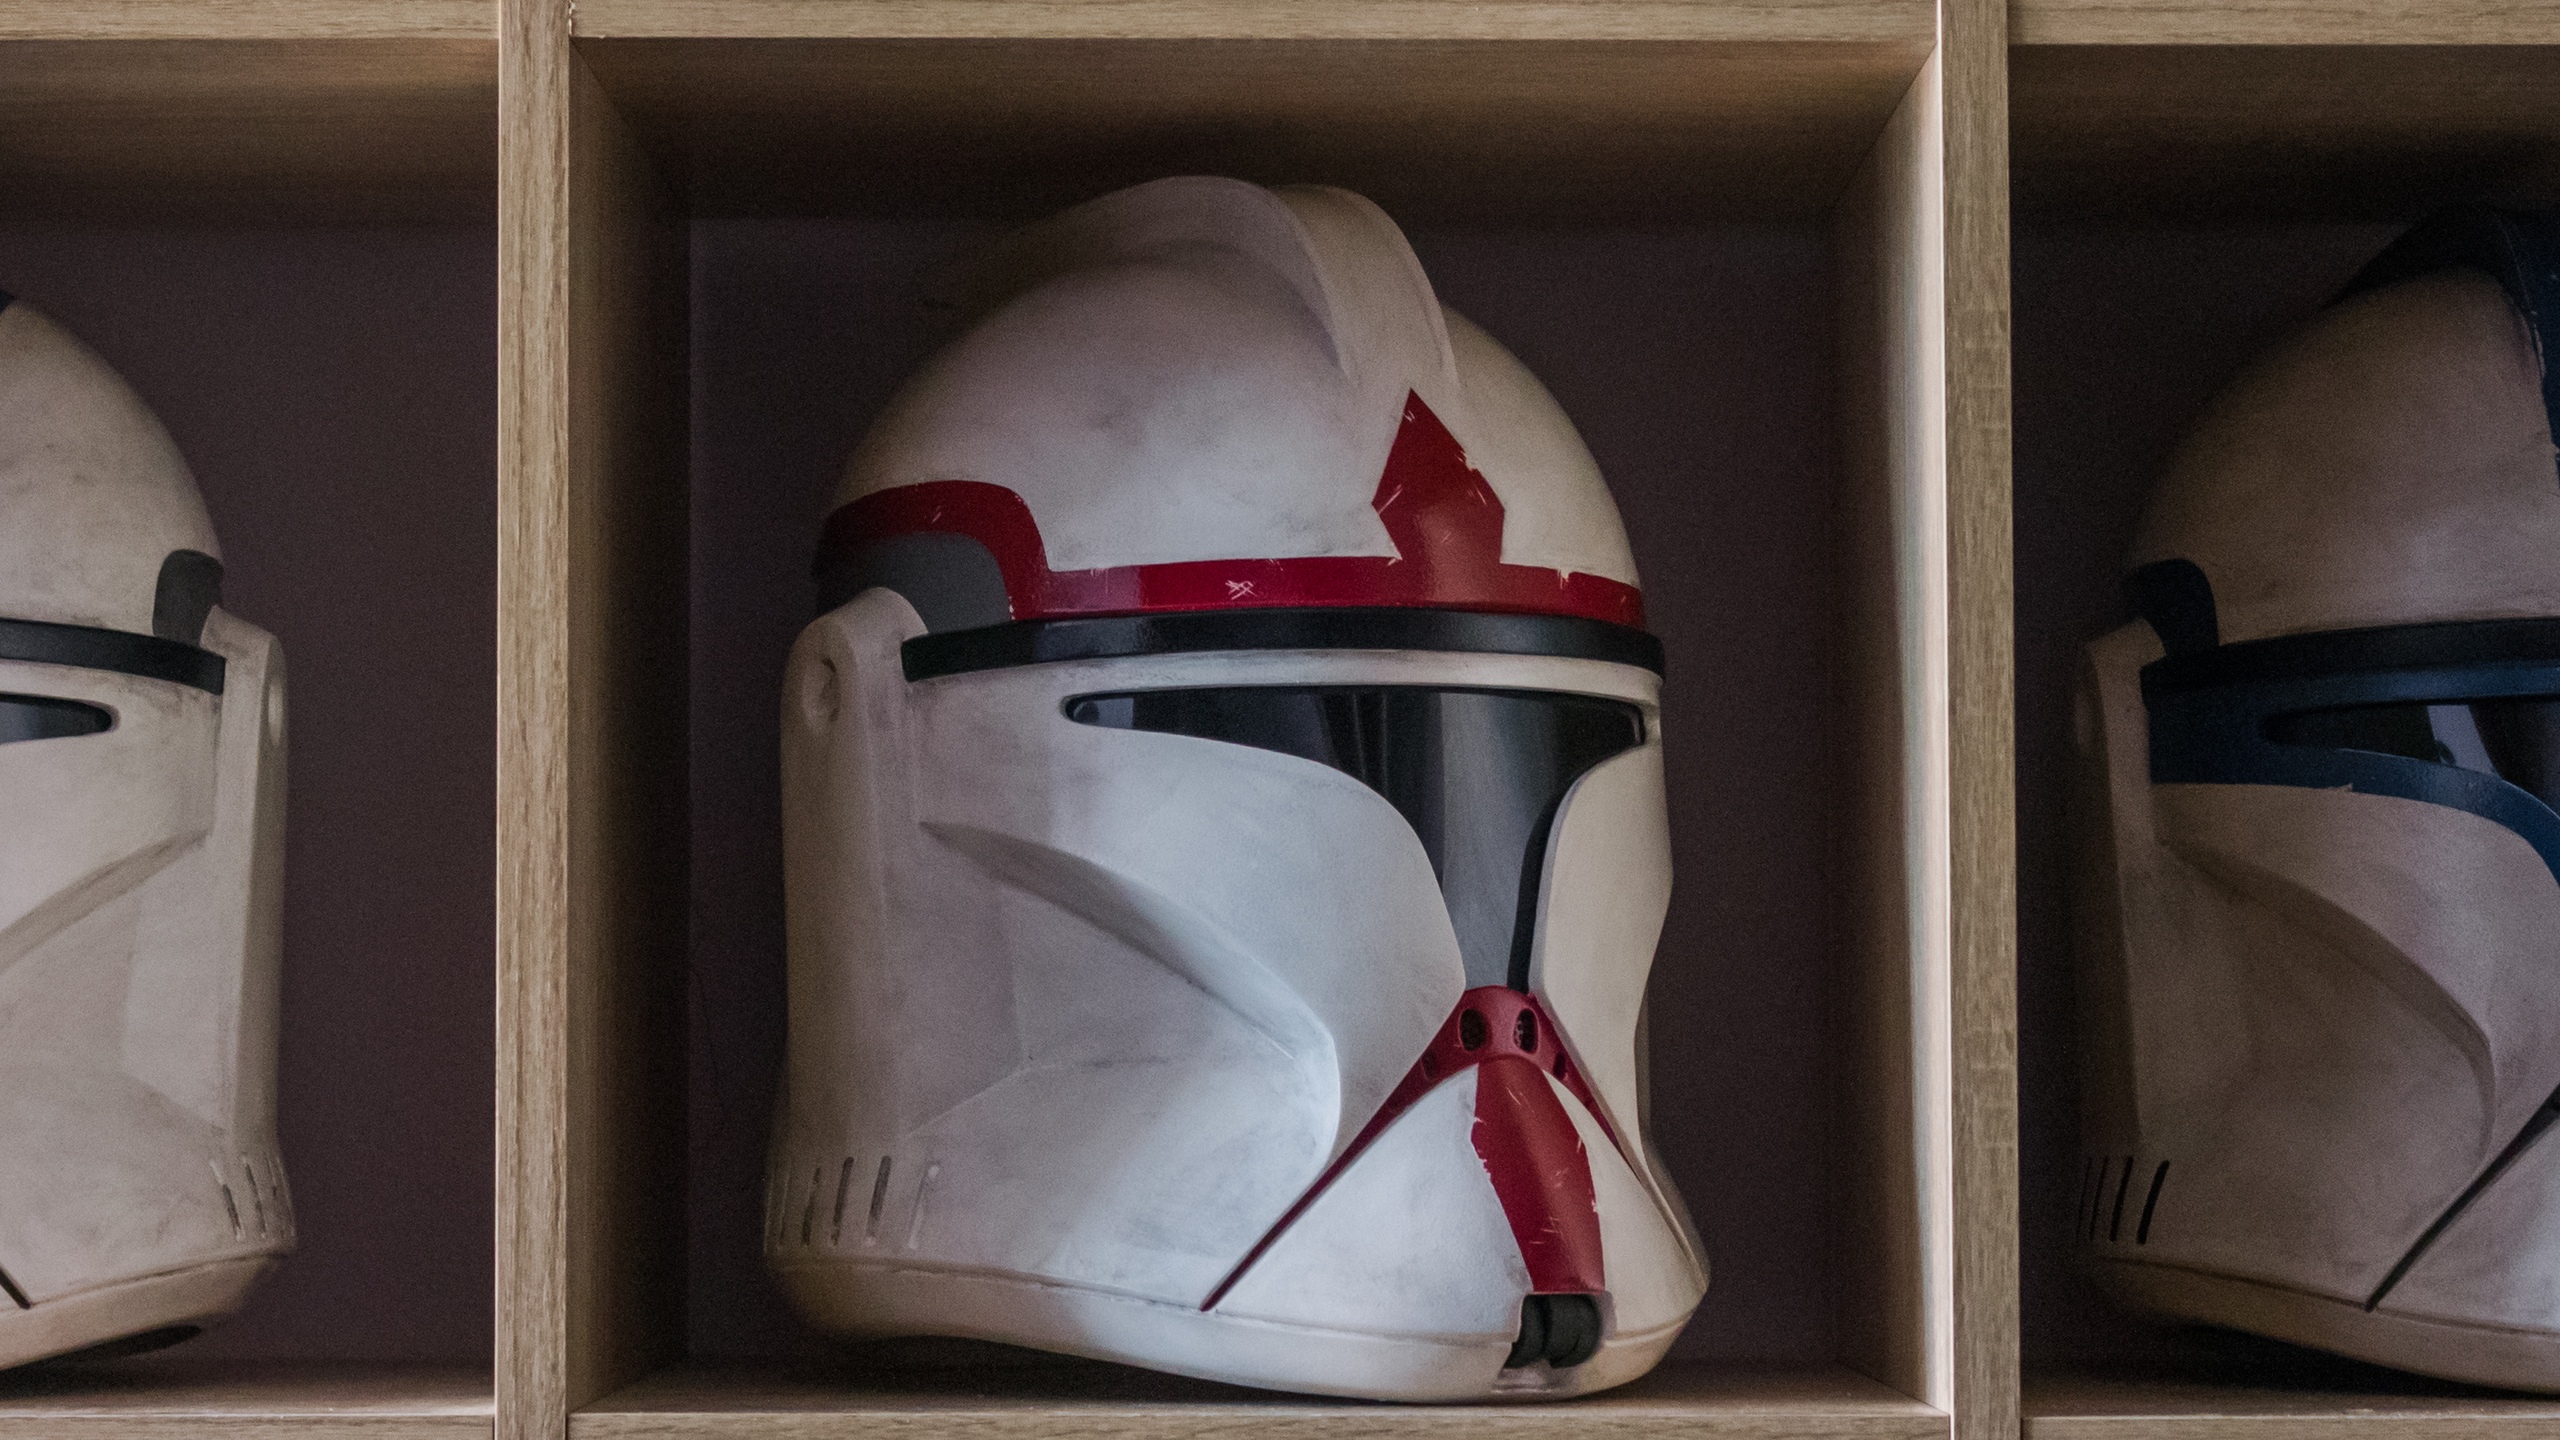 Star Wars Coruscant Guard Phase I helmet